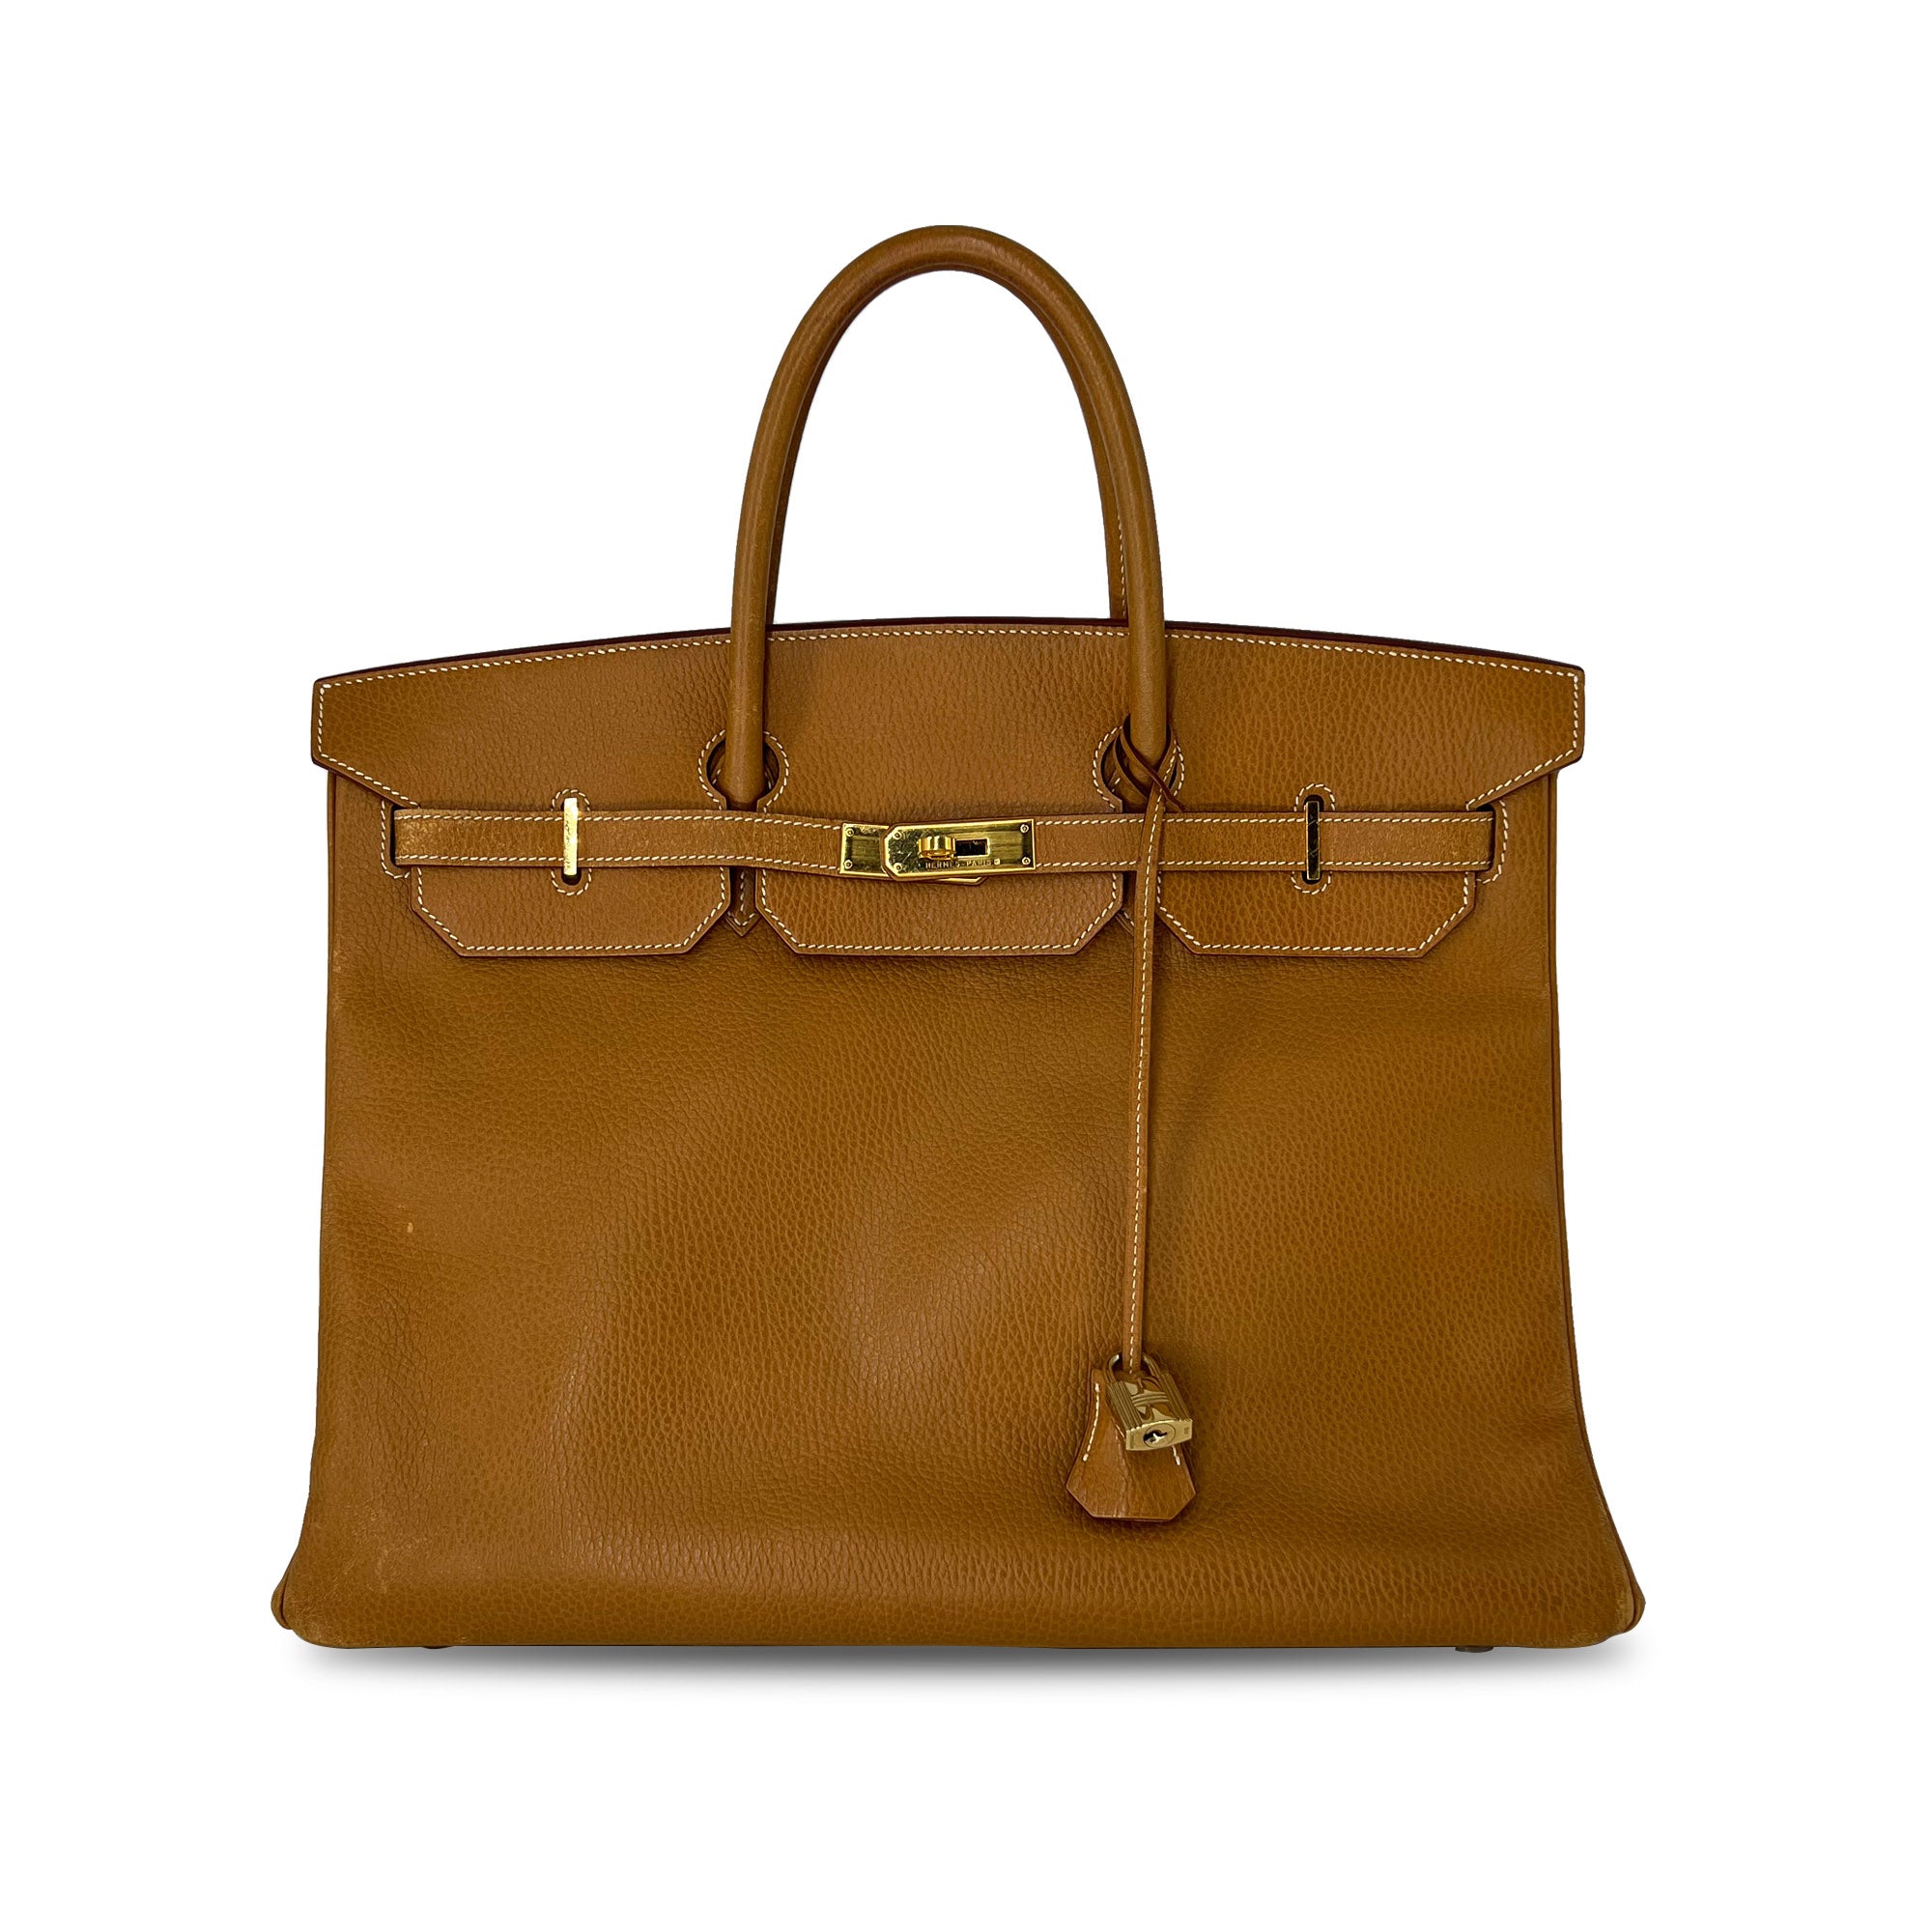 Designer Bags – VintageBooBoo Pre owned designer bags, shoes, clothes